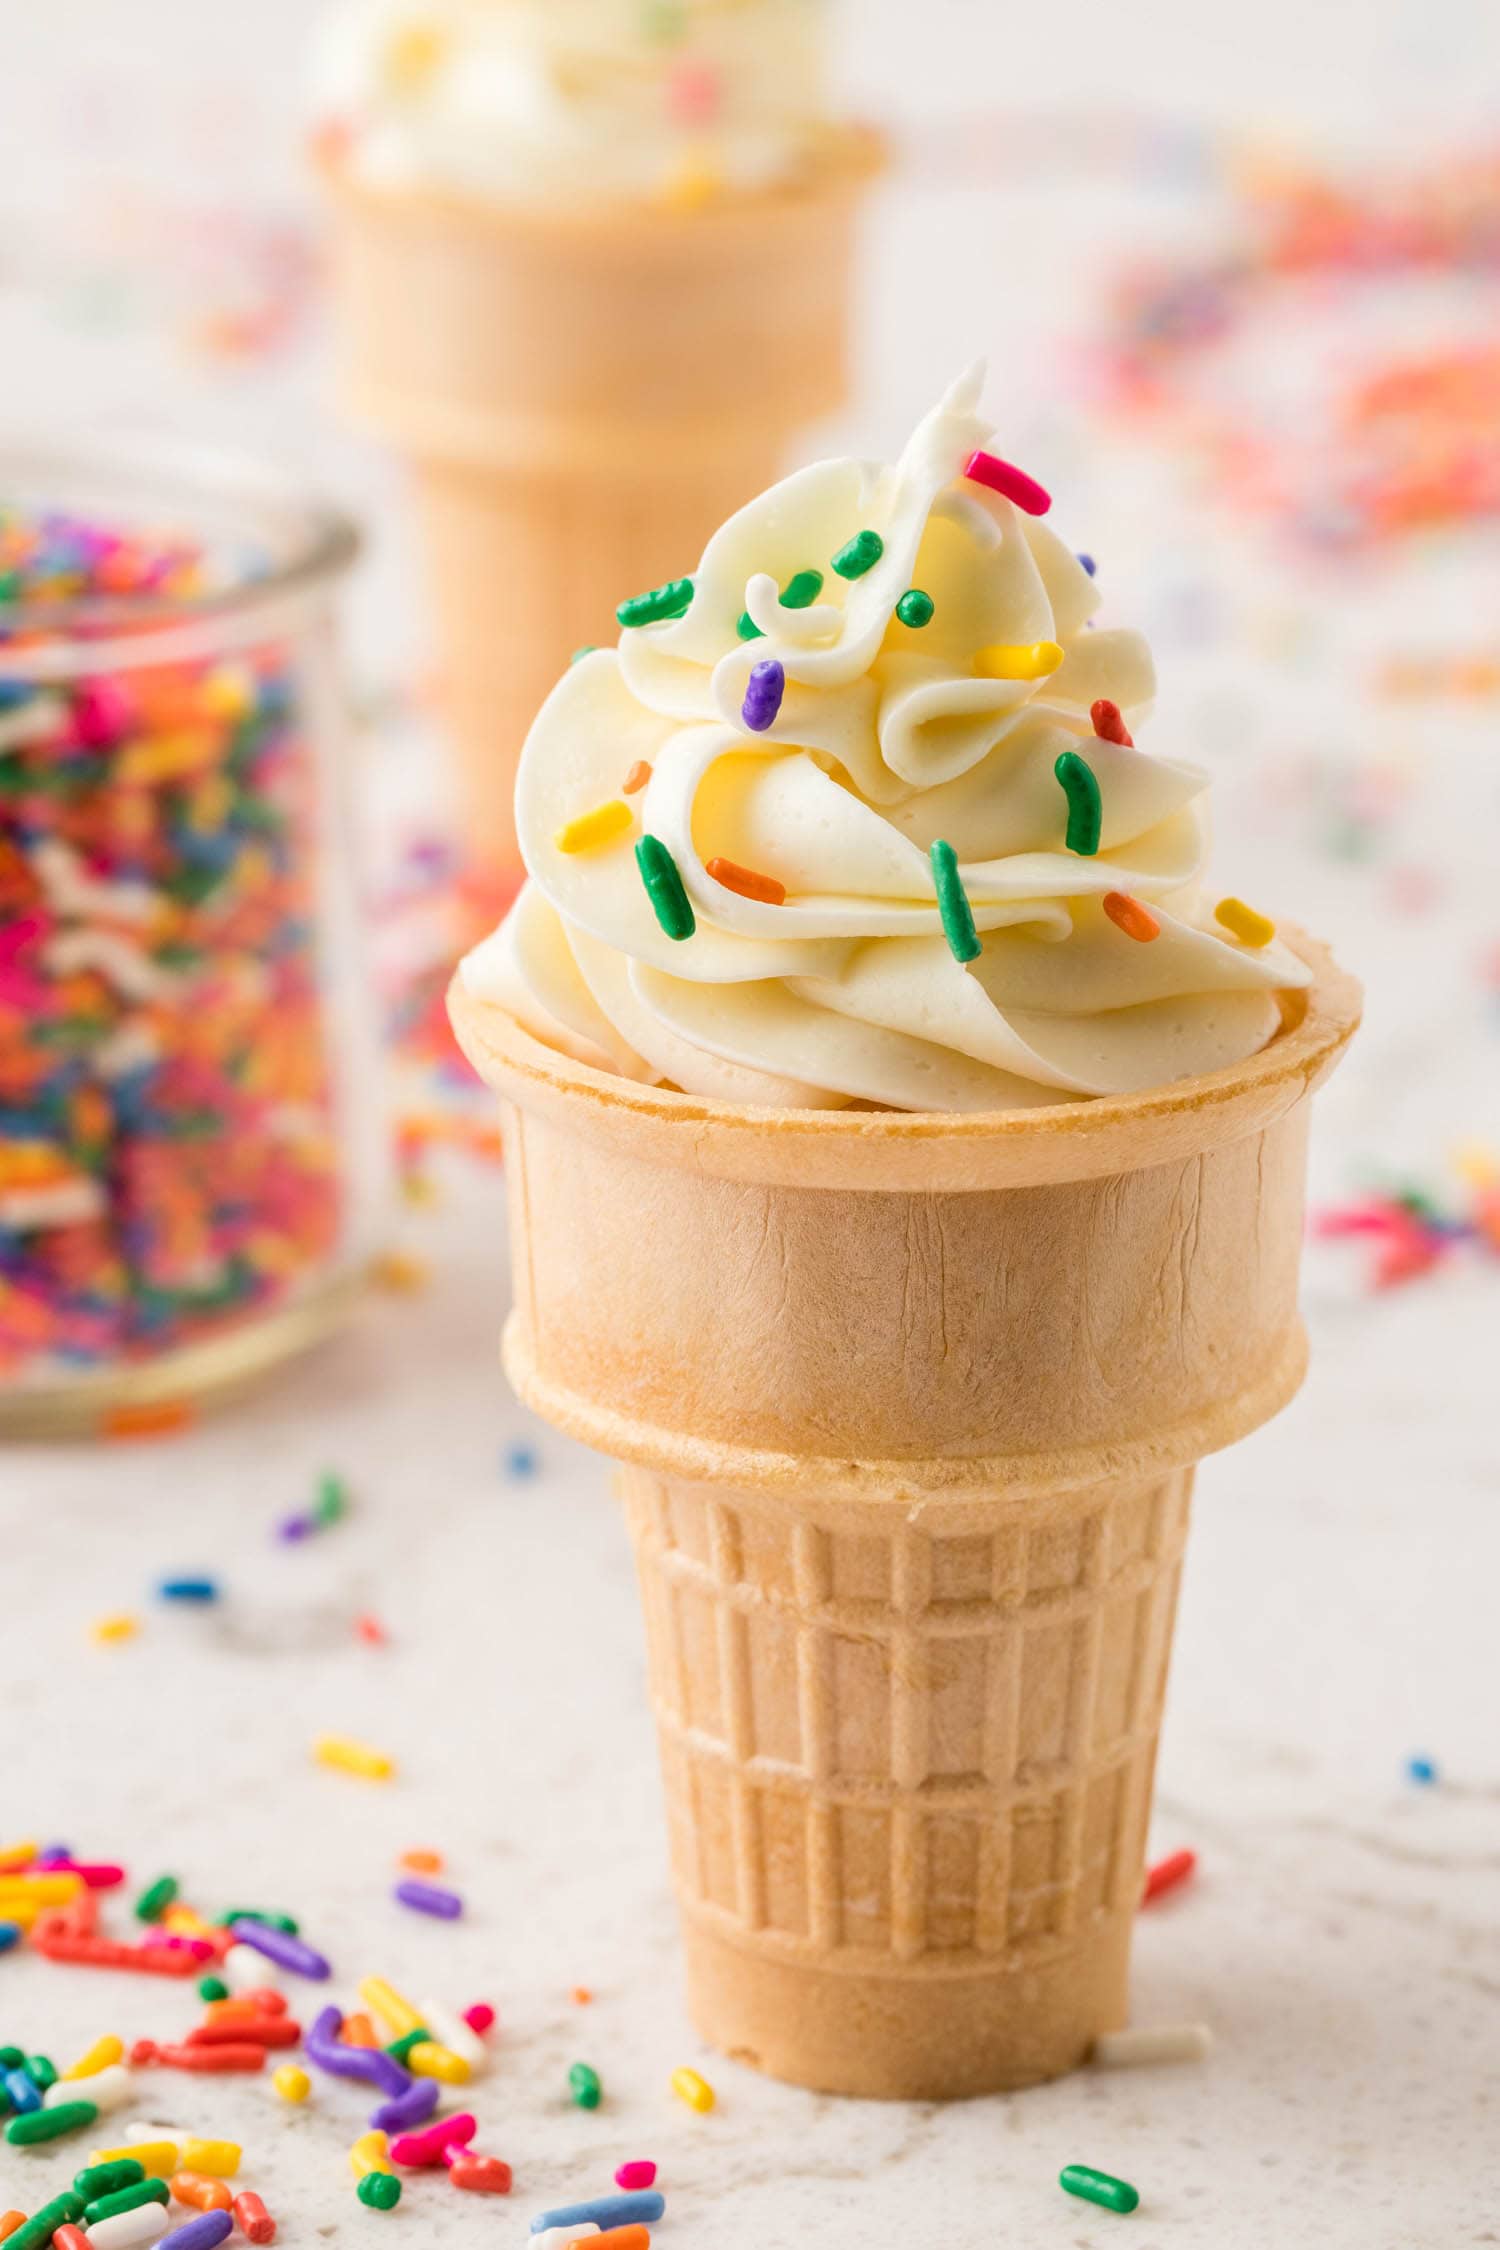 Close up Photo of the Ice Cream Cone